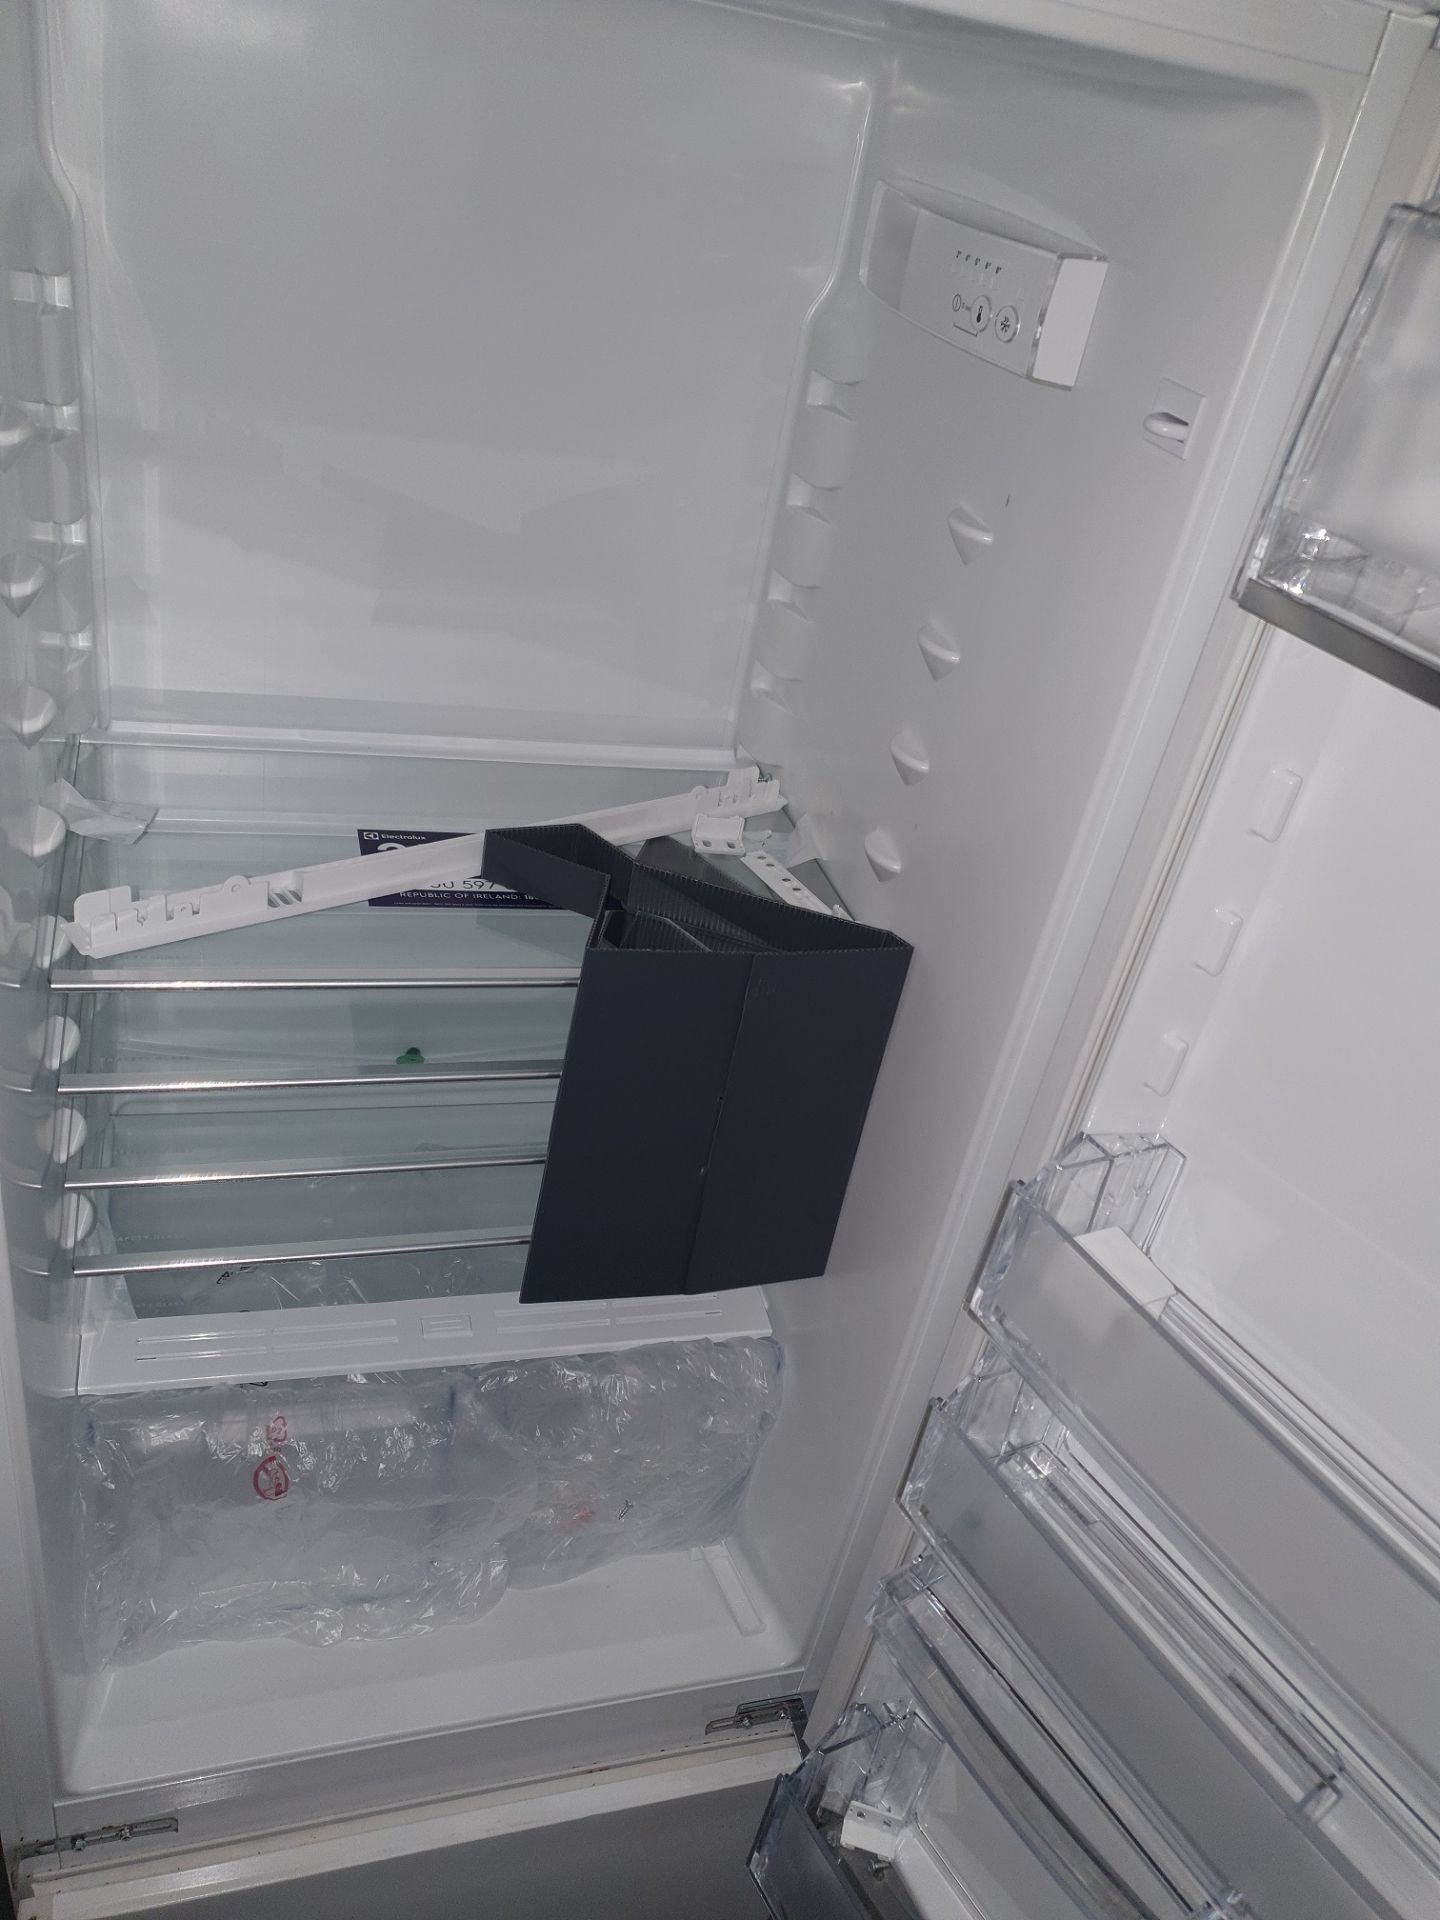 NEW/GRADED AND UNPACKAGED Zanussi ZBB28441SV Integrated 70/30 Fridge Freezer (Brand new slight - Image 14 of 14